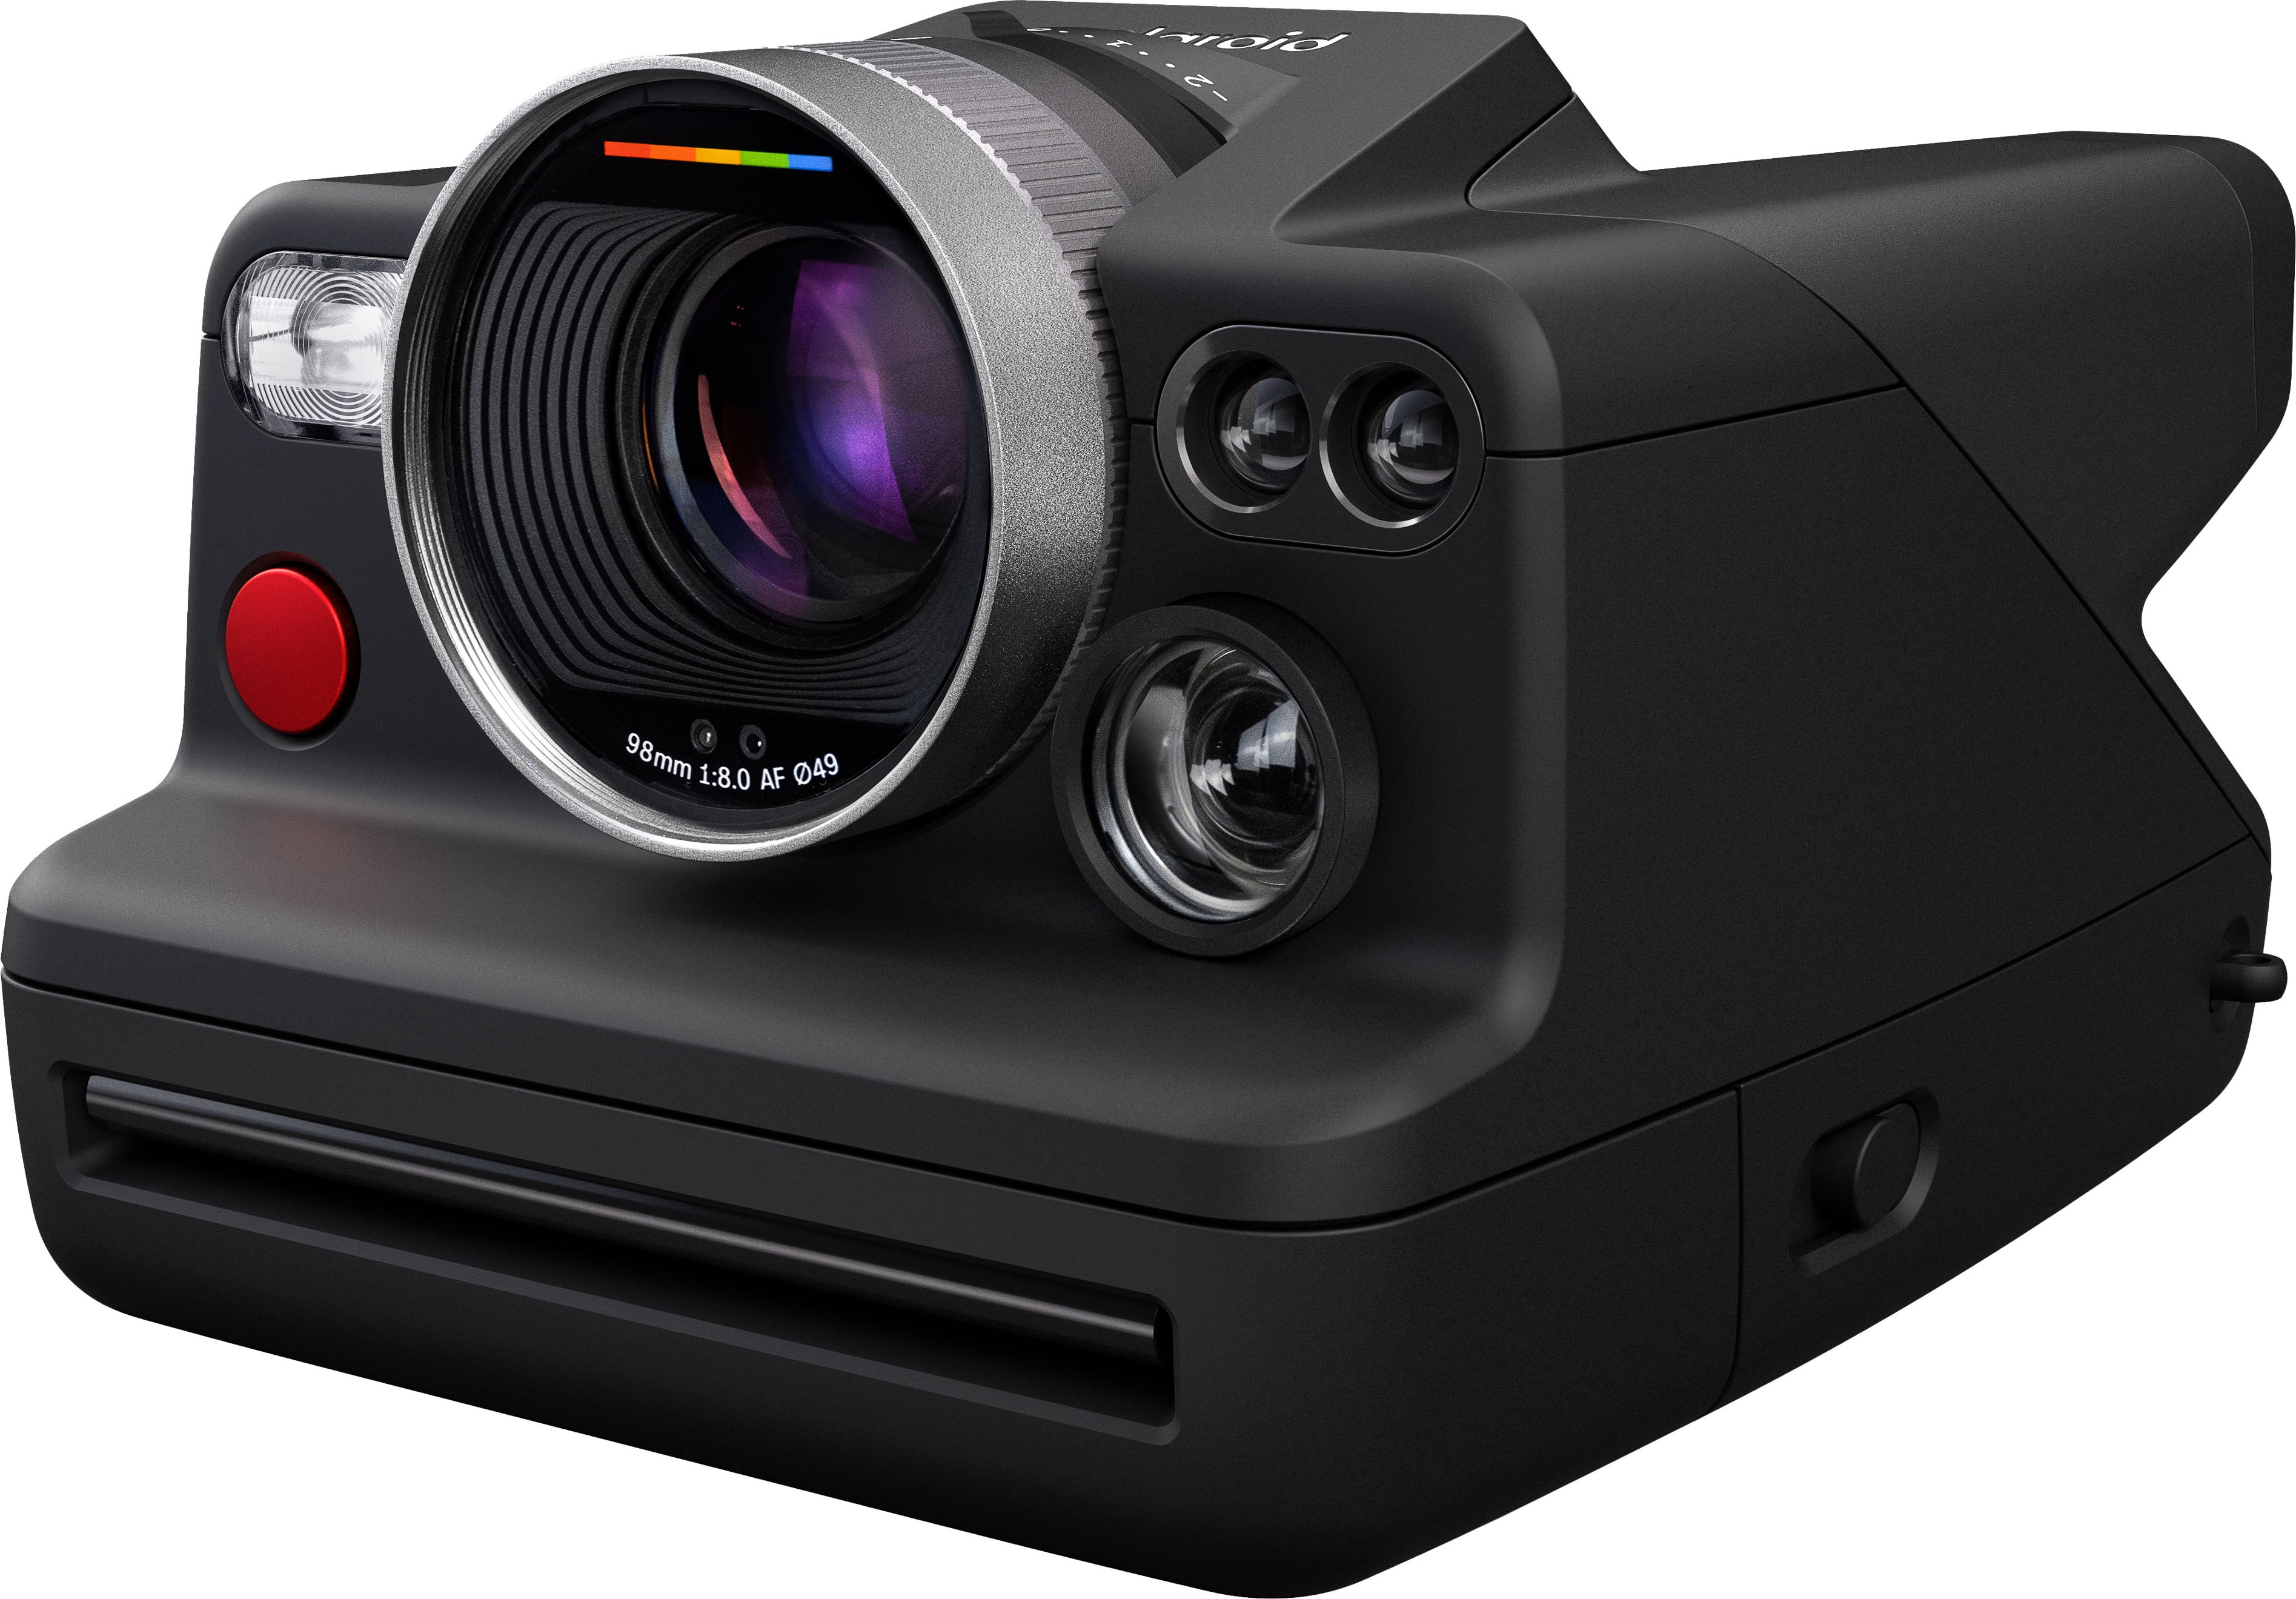 Polaroid Now Instant Film Camera Generation 2 Black & White 009072 - Best  Buy